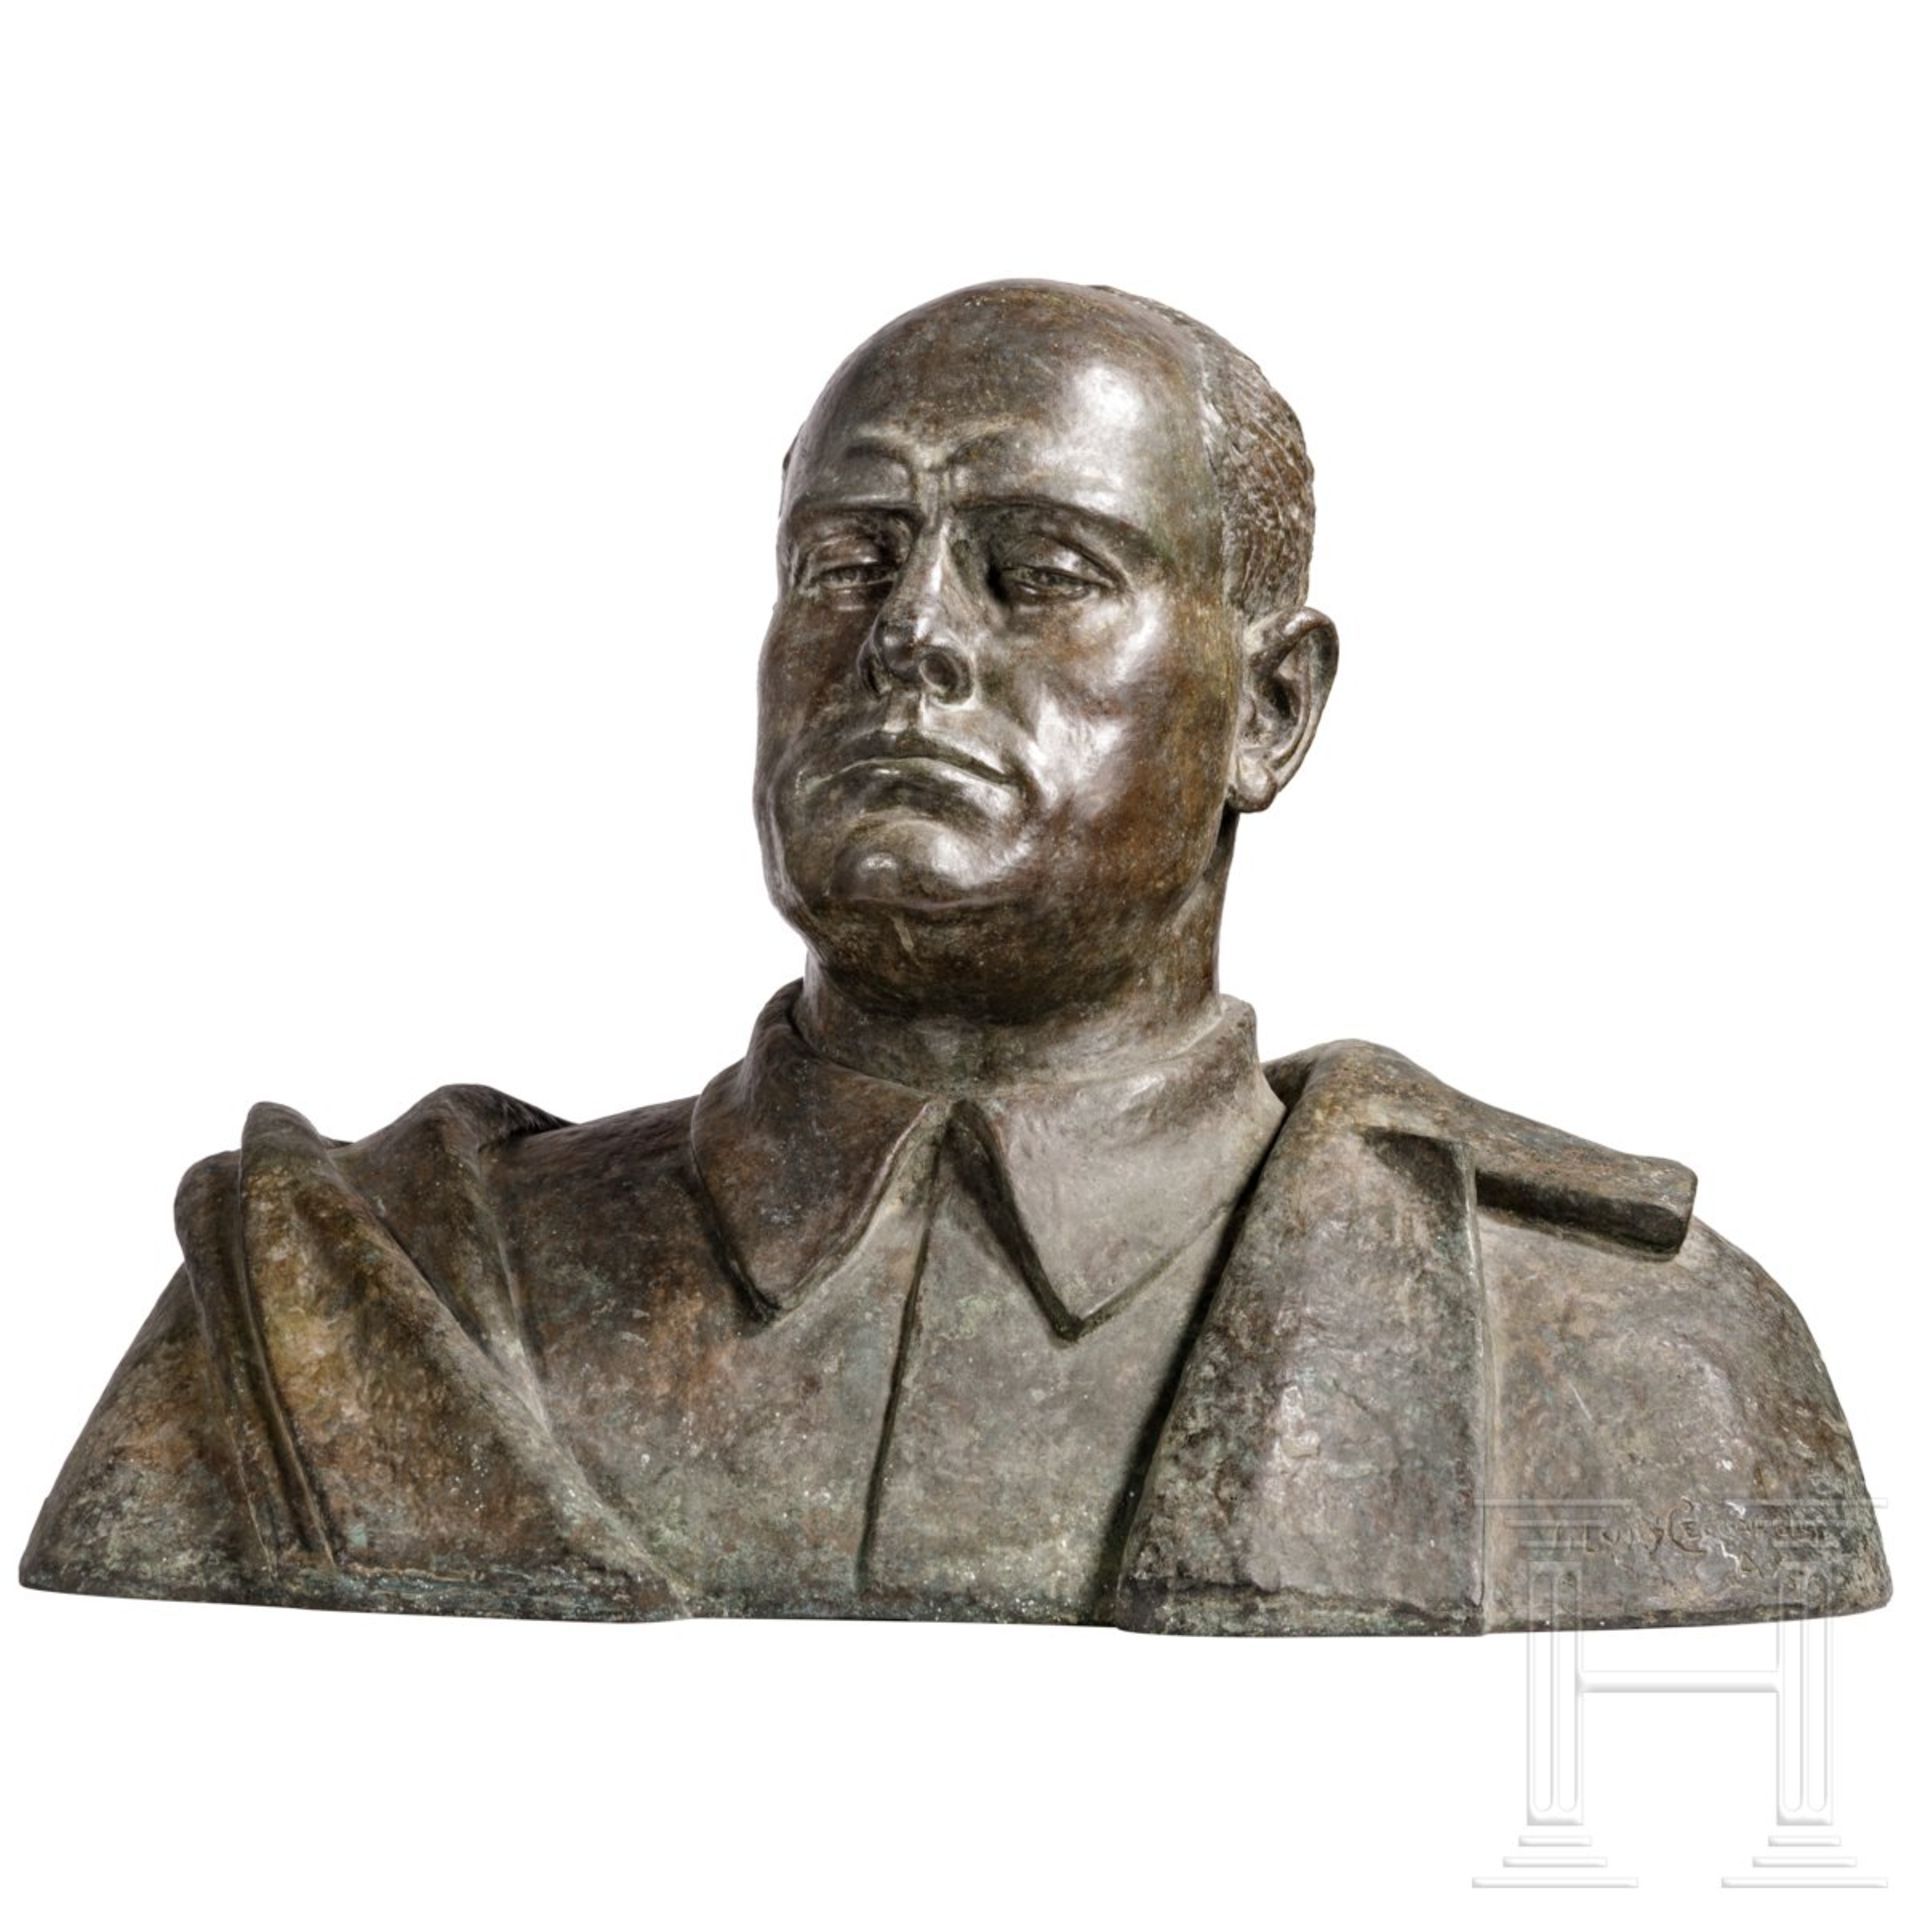 Silvio Ceccarelli (1901 - 1985) - Monumentale Portraitbüste Mussolinis als Richter, datiert